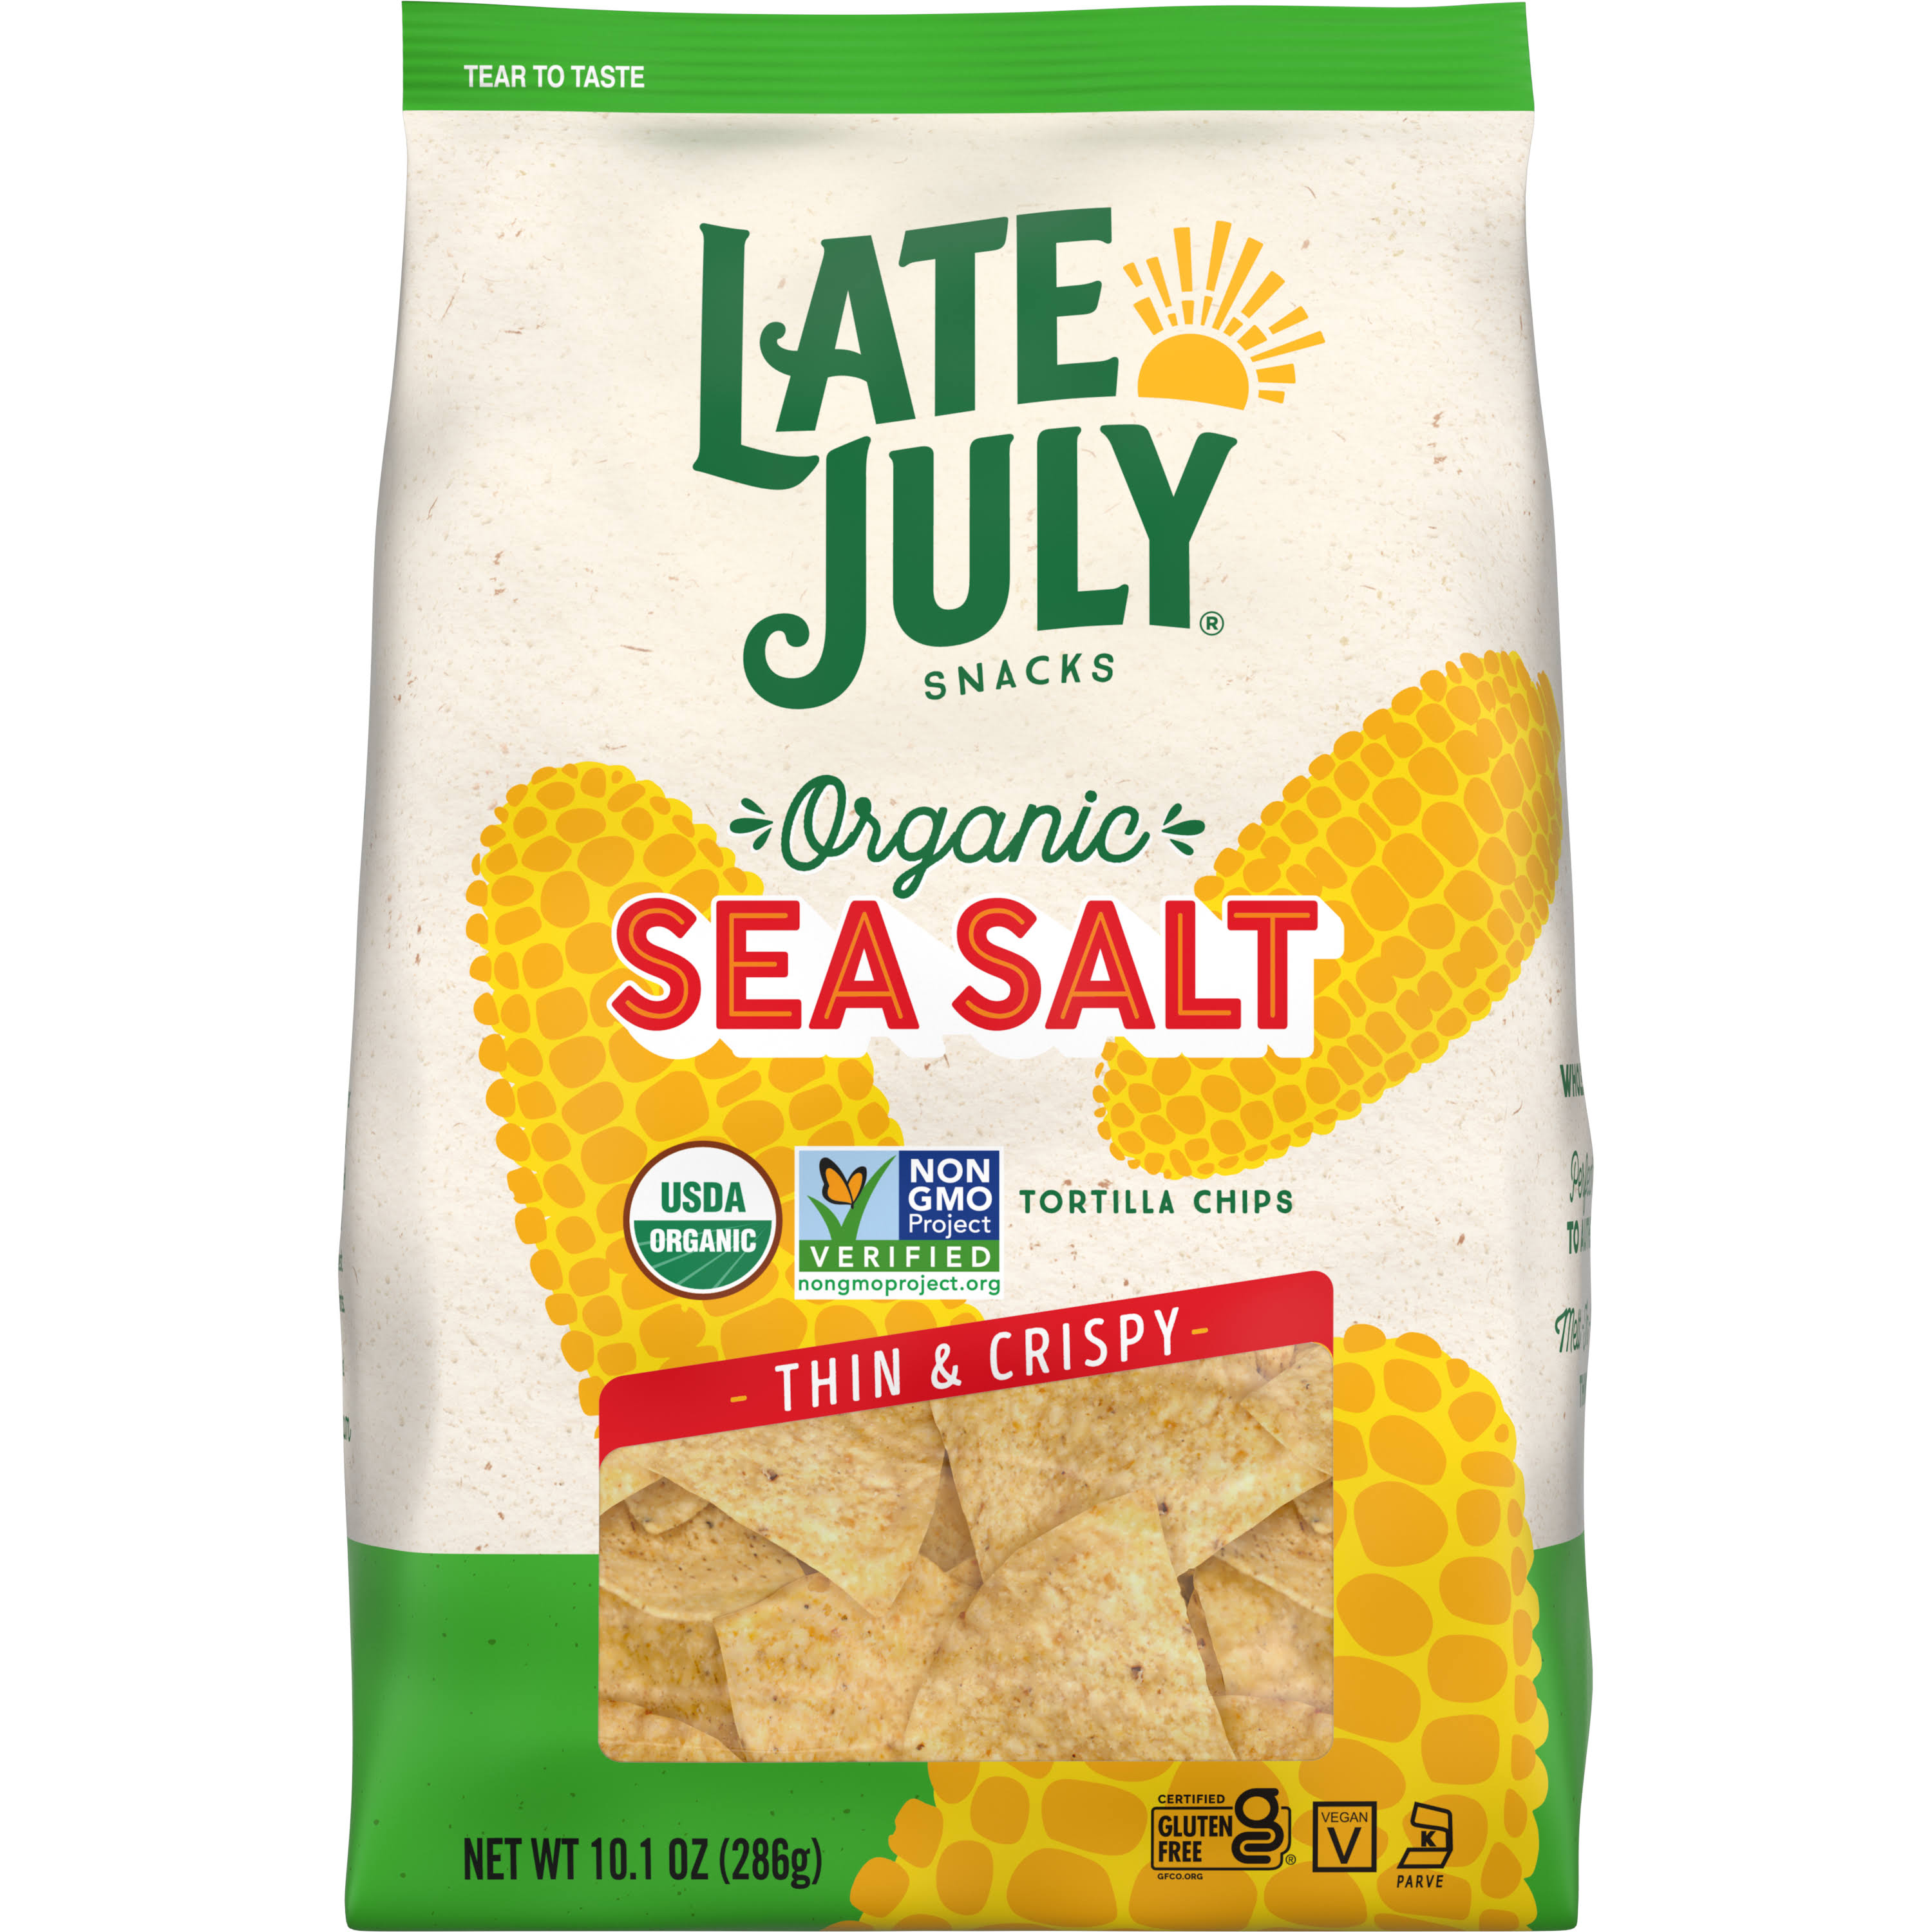 LATE JULY Snacks Sea Salt Thin And Crispy Organic Tortilla Chips, 10.1 Oz Bag